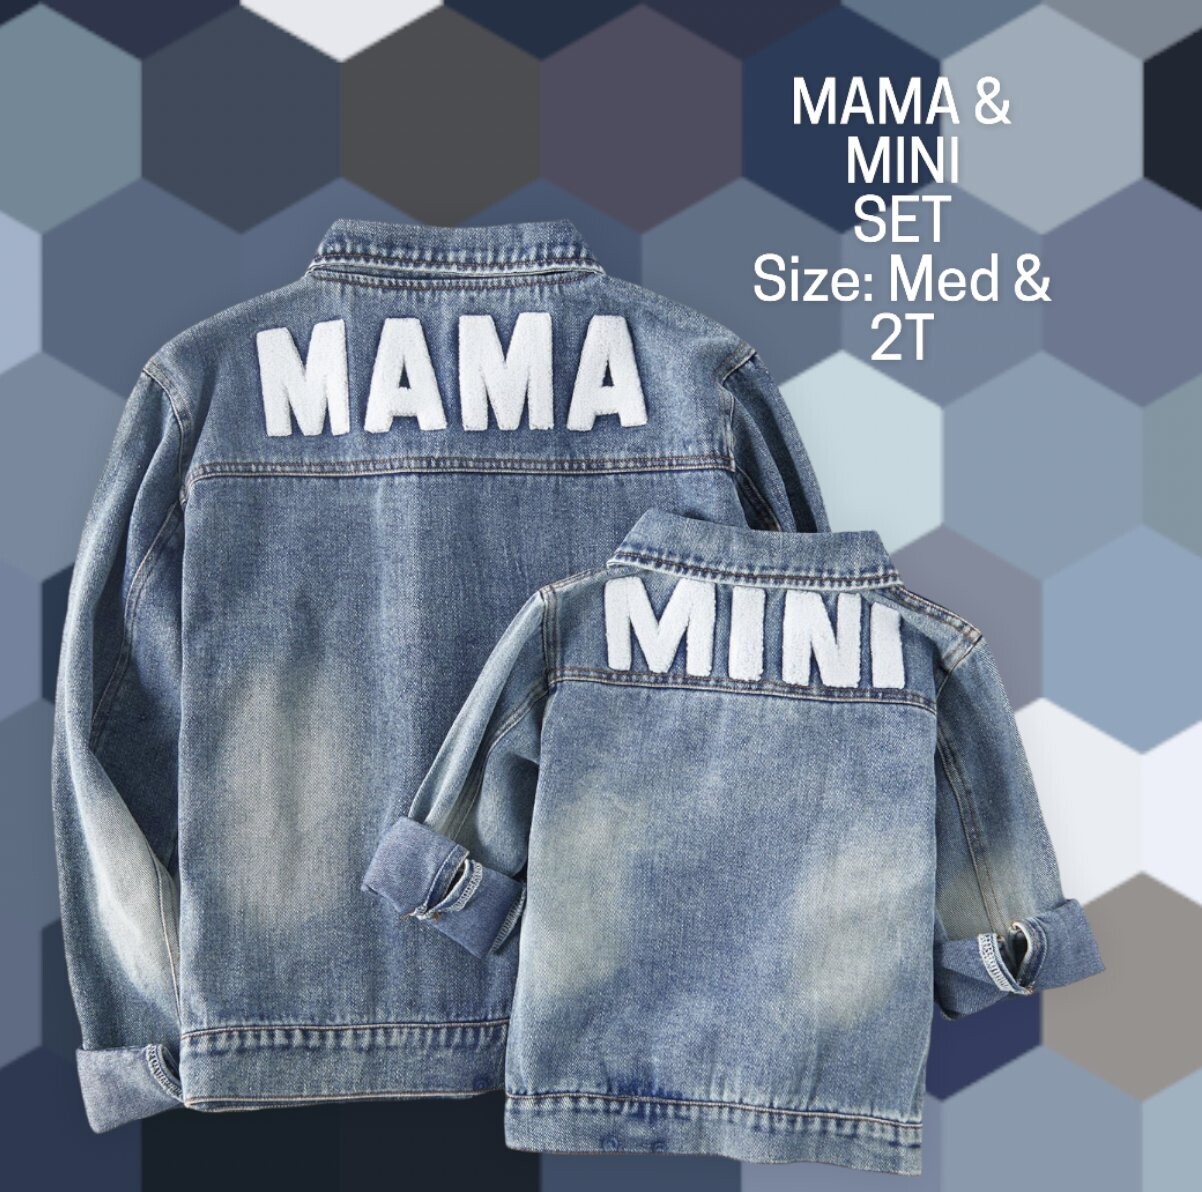 One Lucky Mama and Mini set – IzzyBeeDesigns